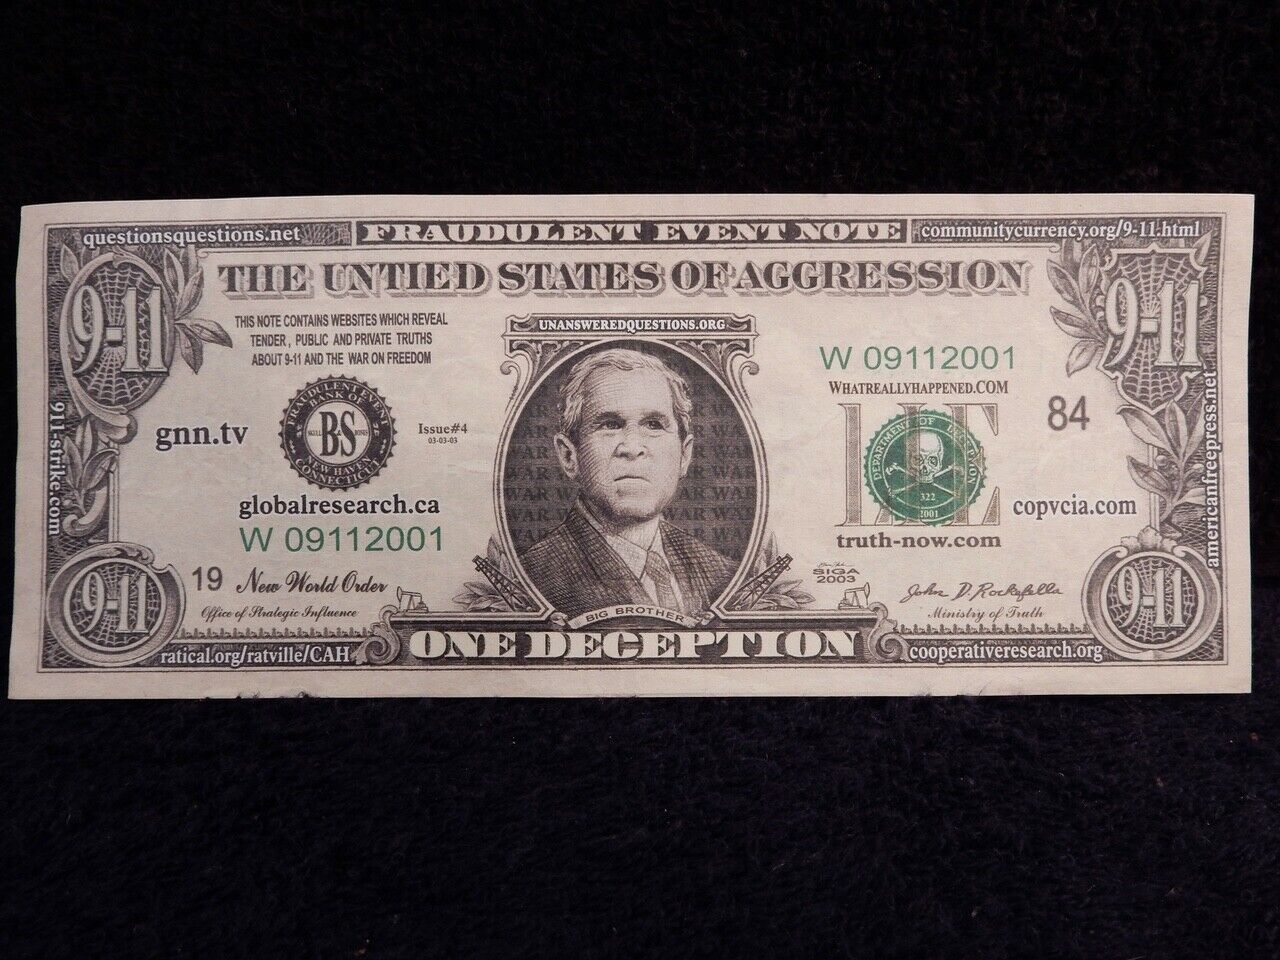 Rarest 9-11 Bill - Fraudulent Event Note - One Deception dollar collector set 